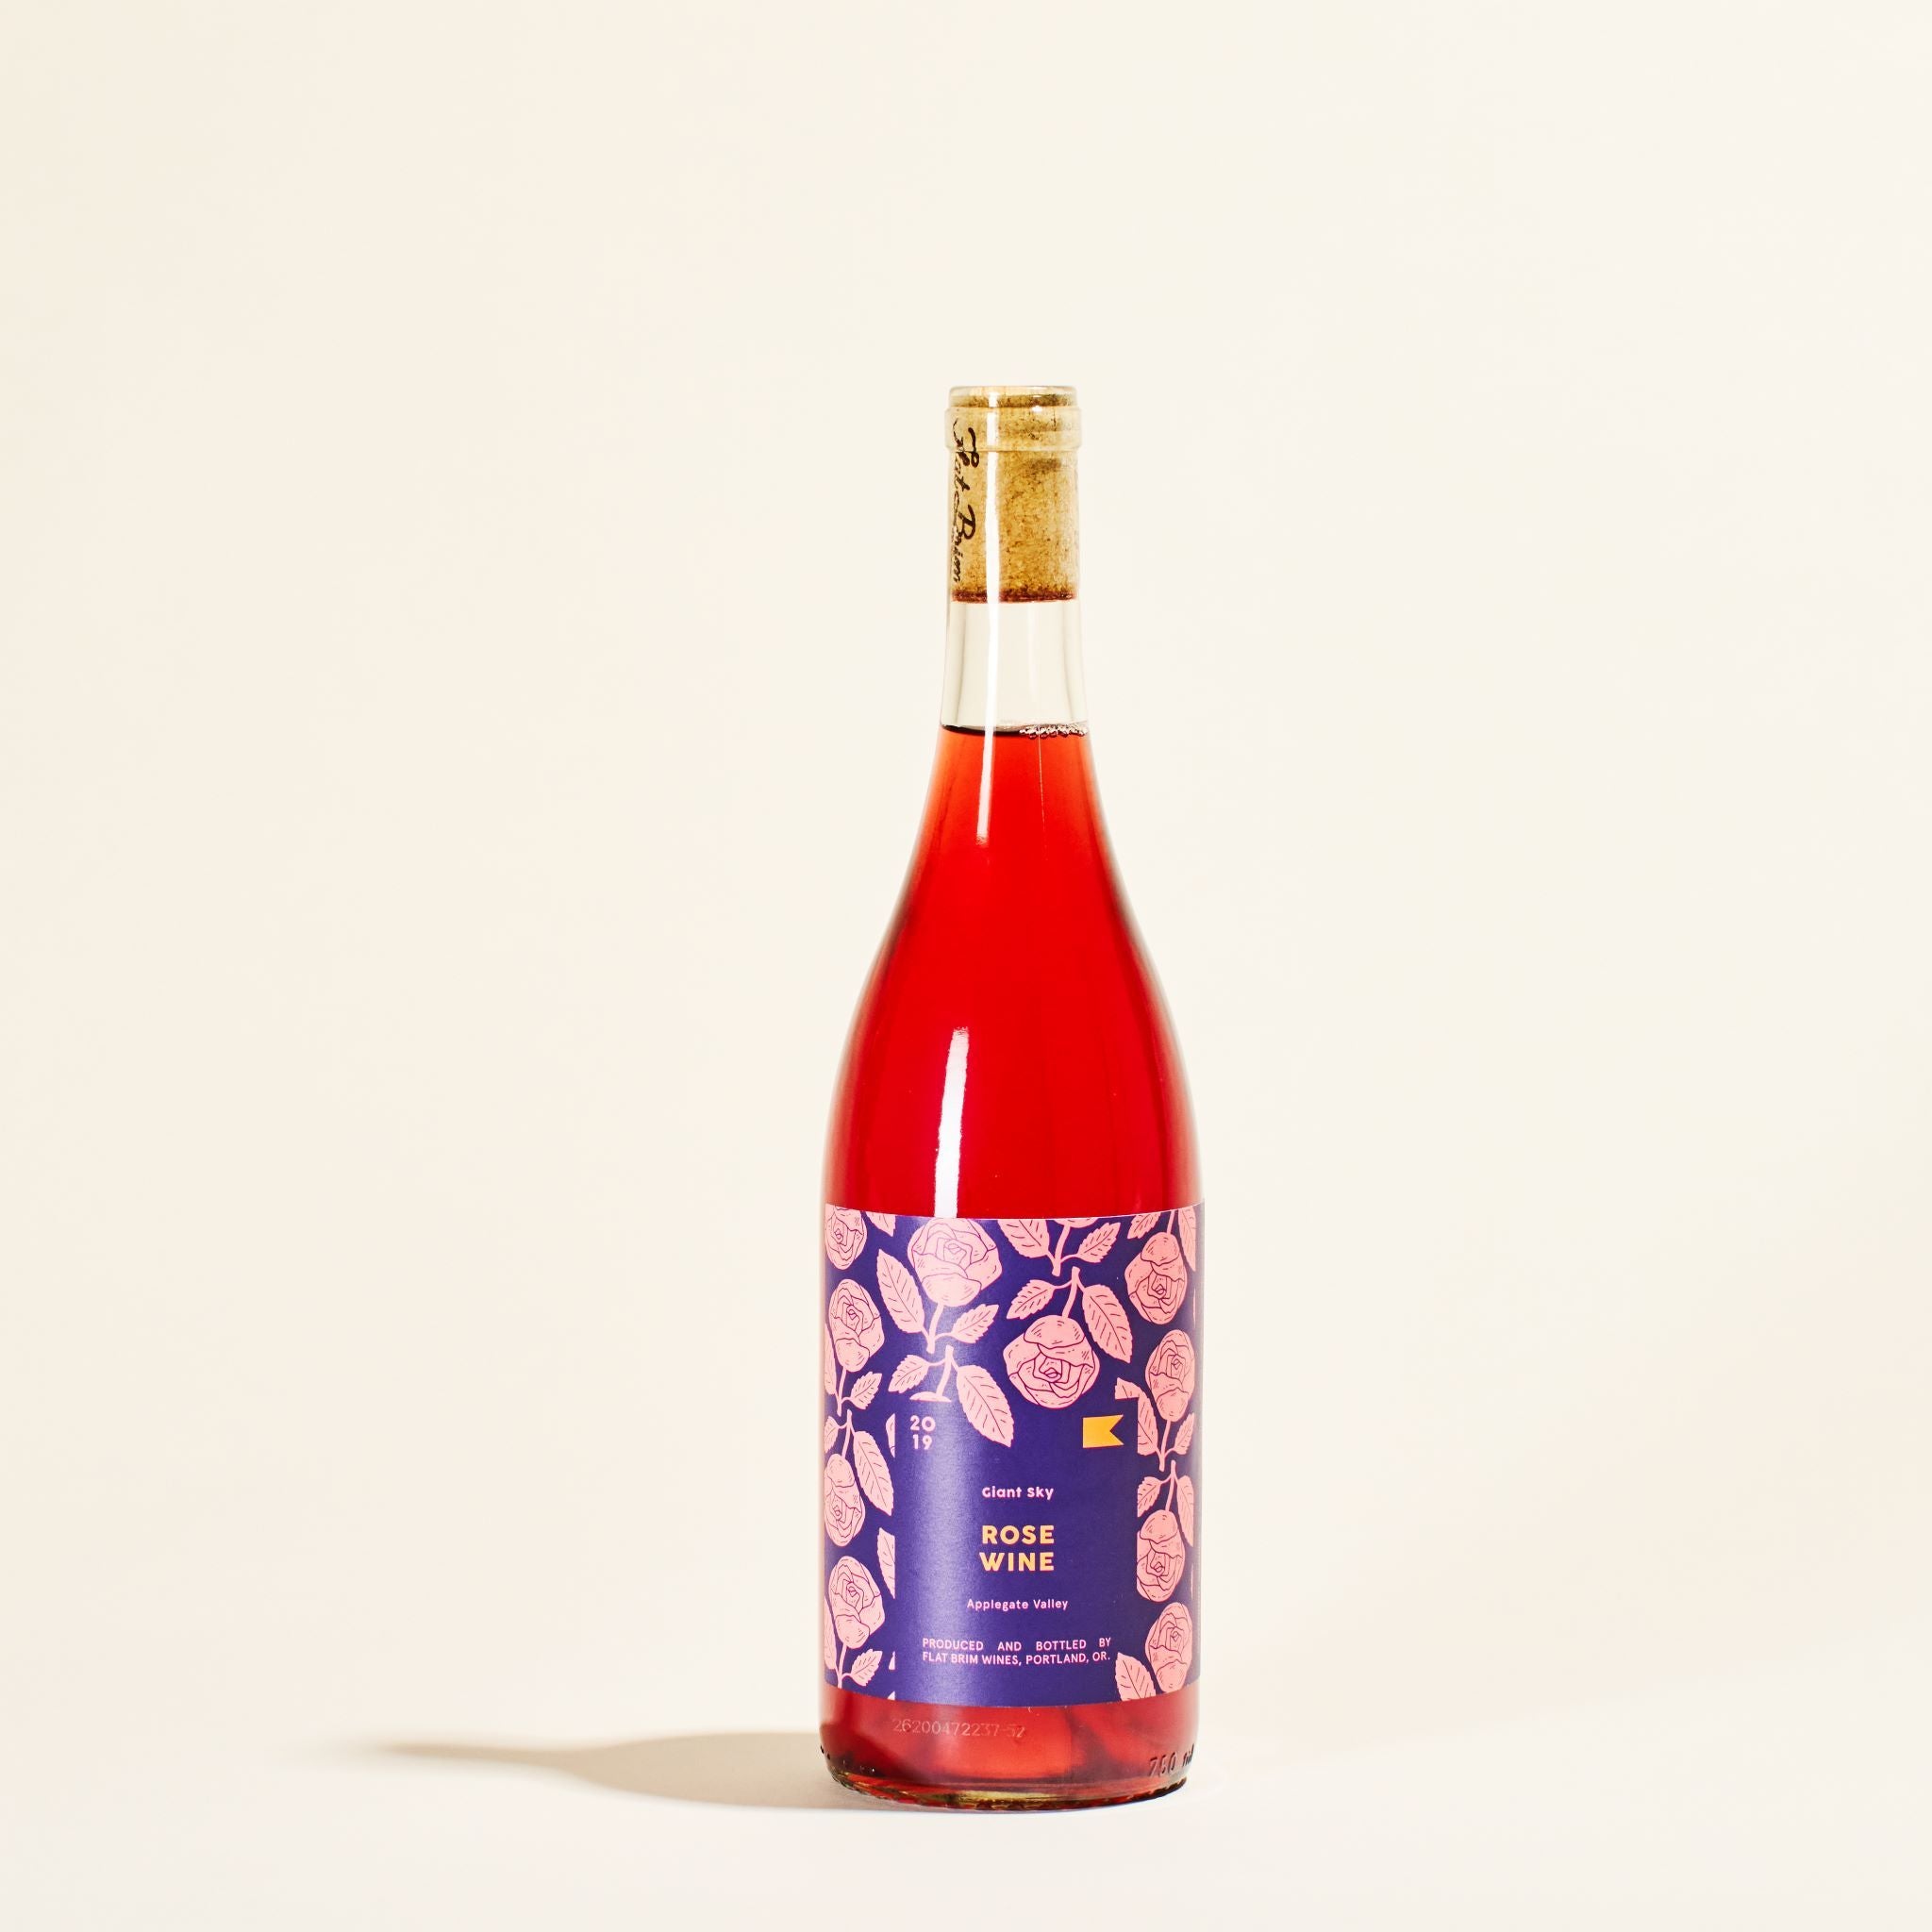 giant sky rose flat brim oregon usa natural rose wine 